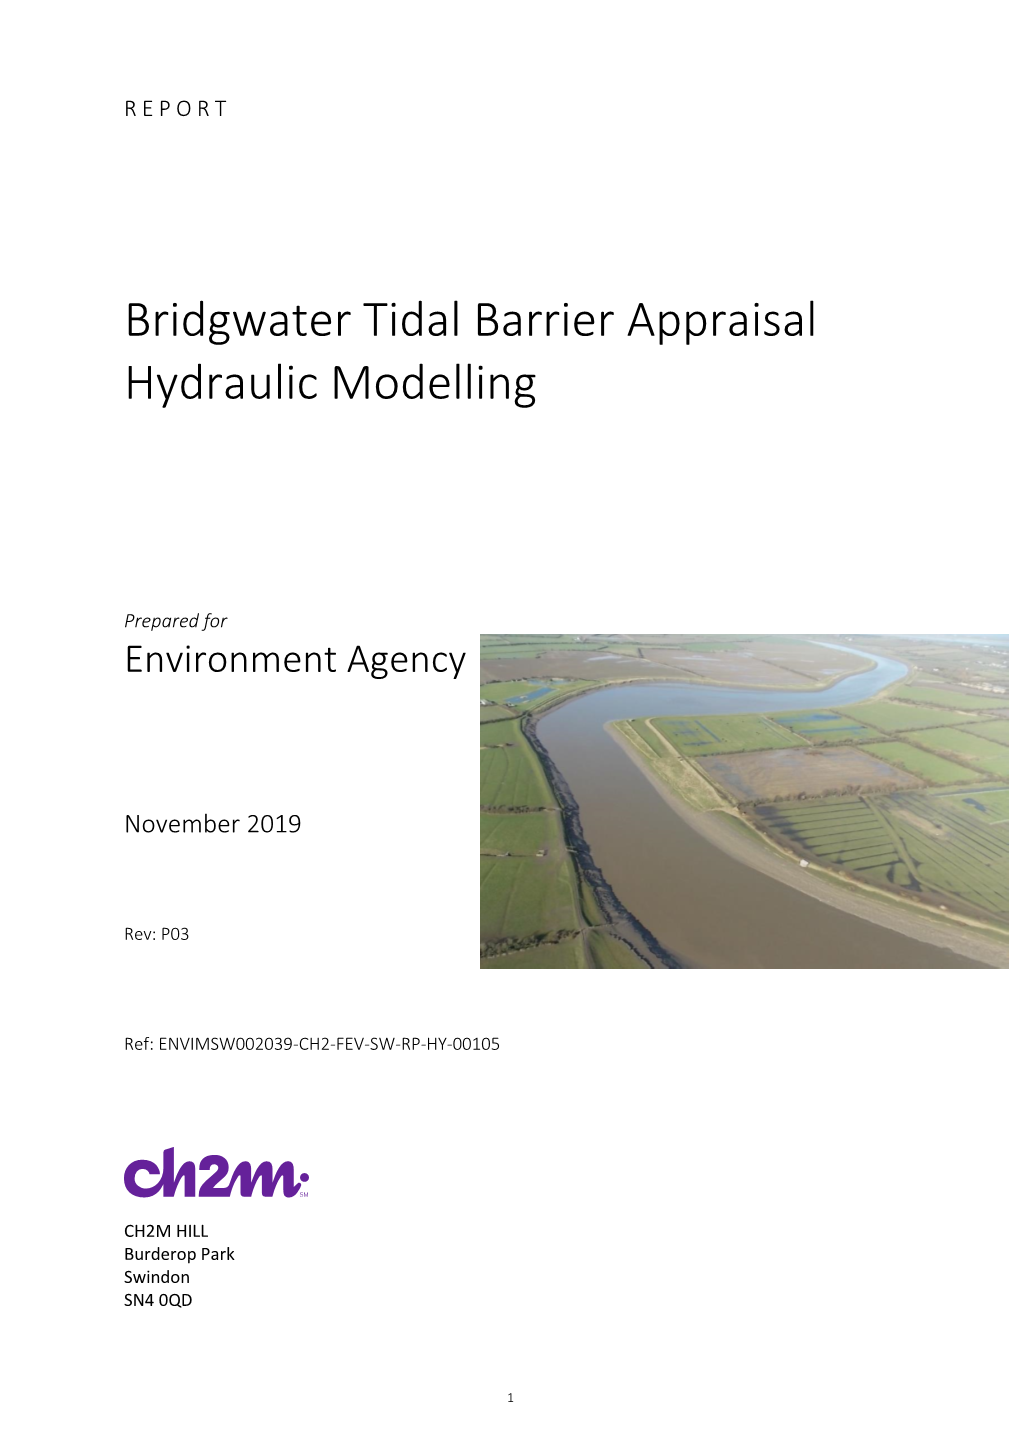 Bridgwater Tidal Barrier Appraisal Hydraulic Modelling